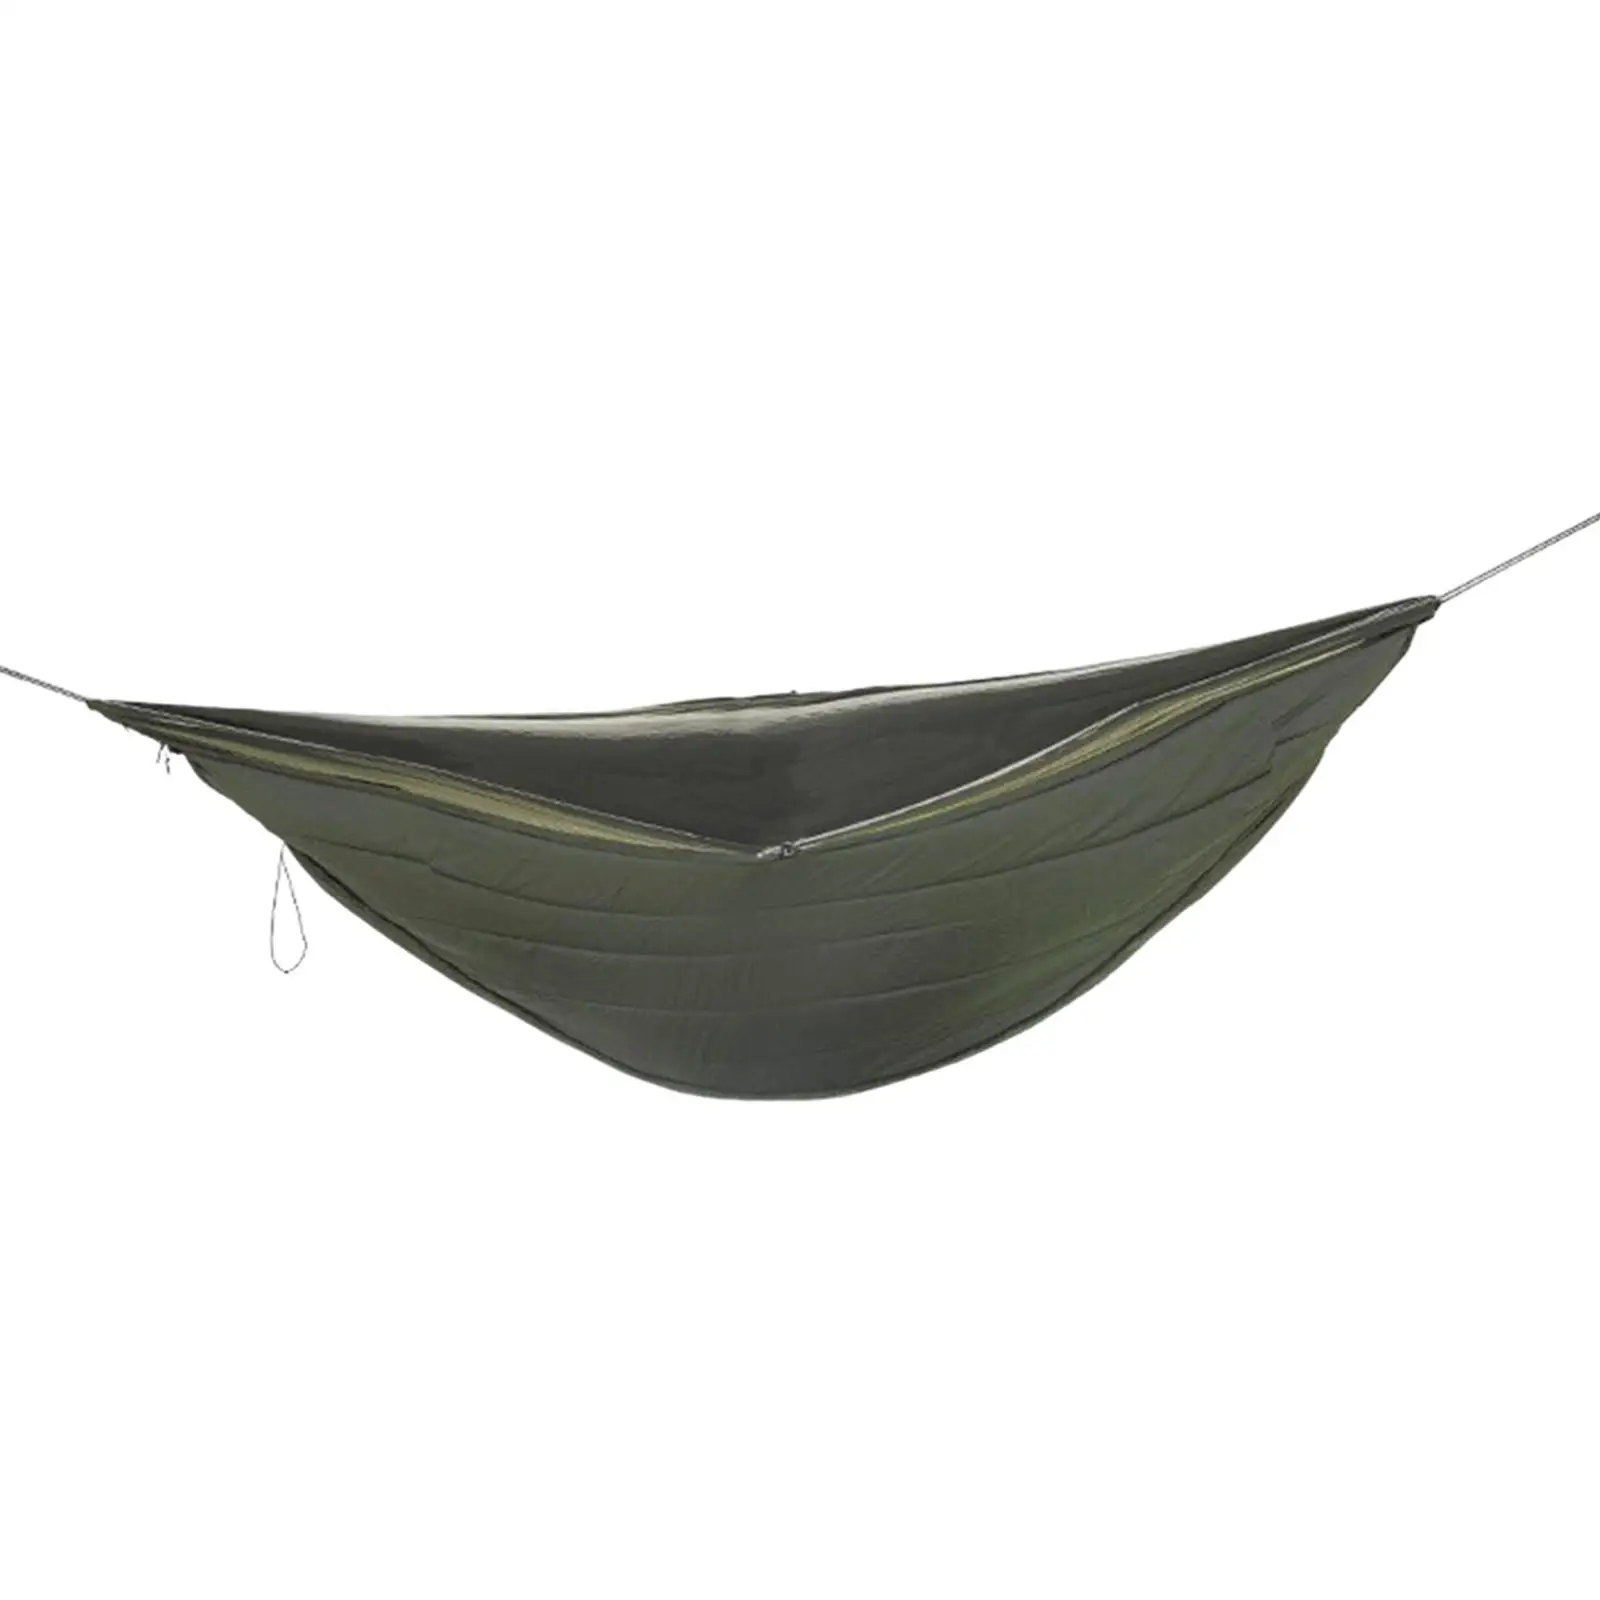 Hammock Underquilt Large Under Blanket Camping Sleeping Bag for Hiking